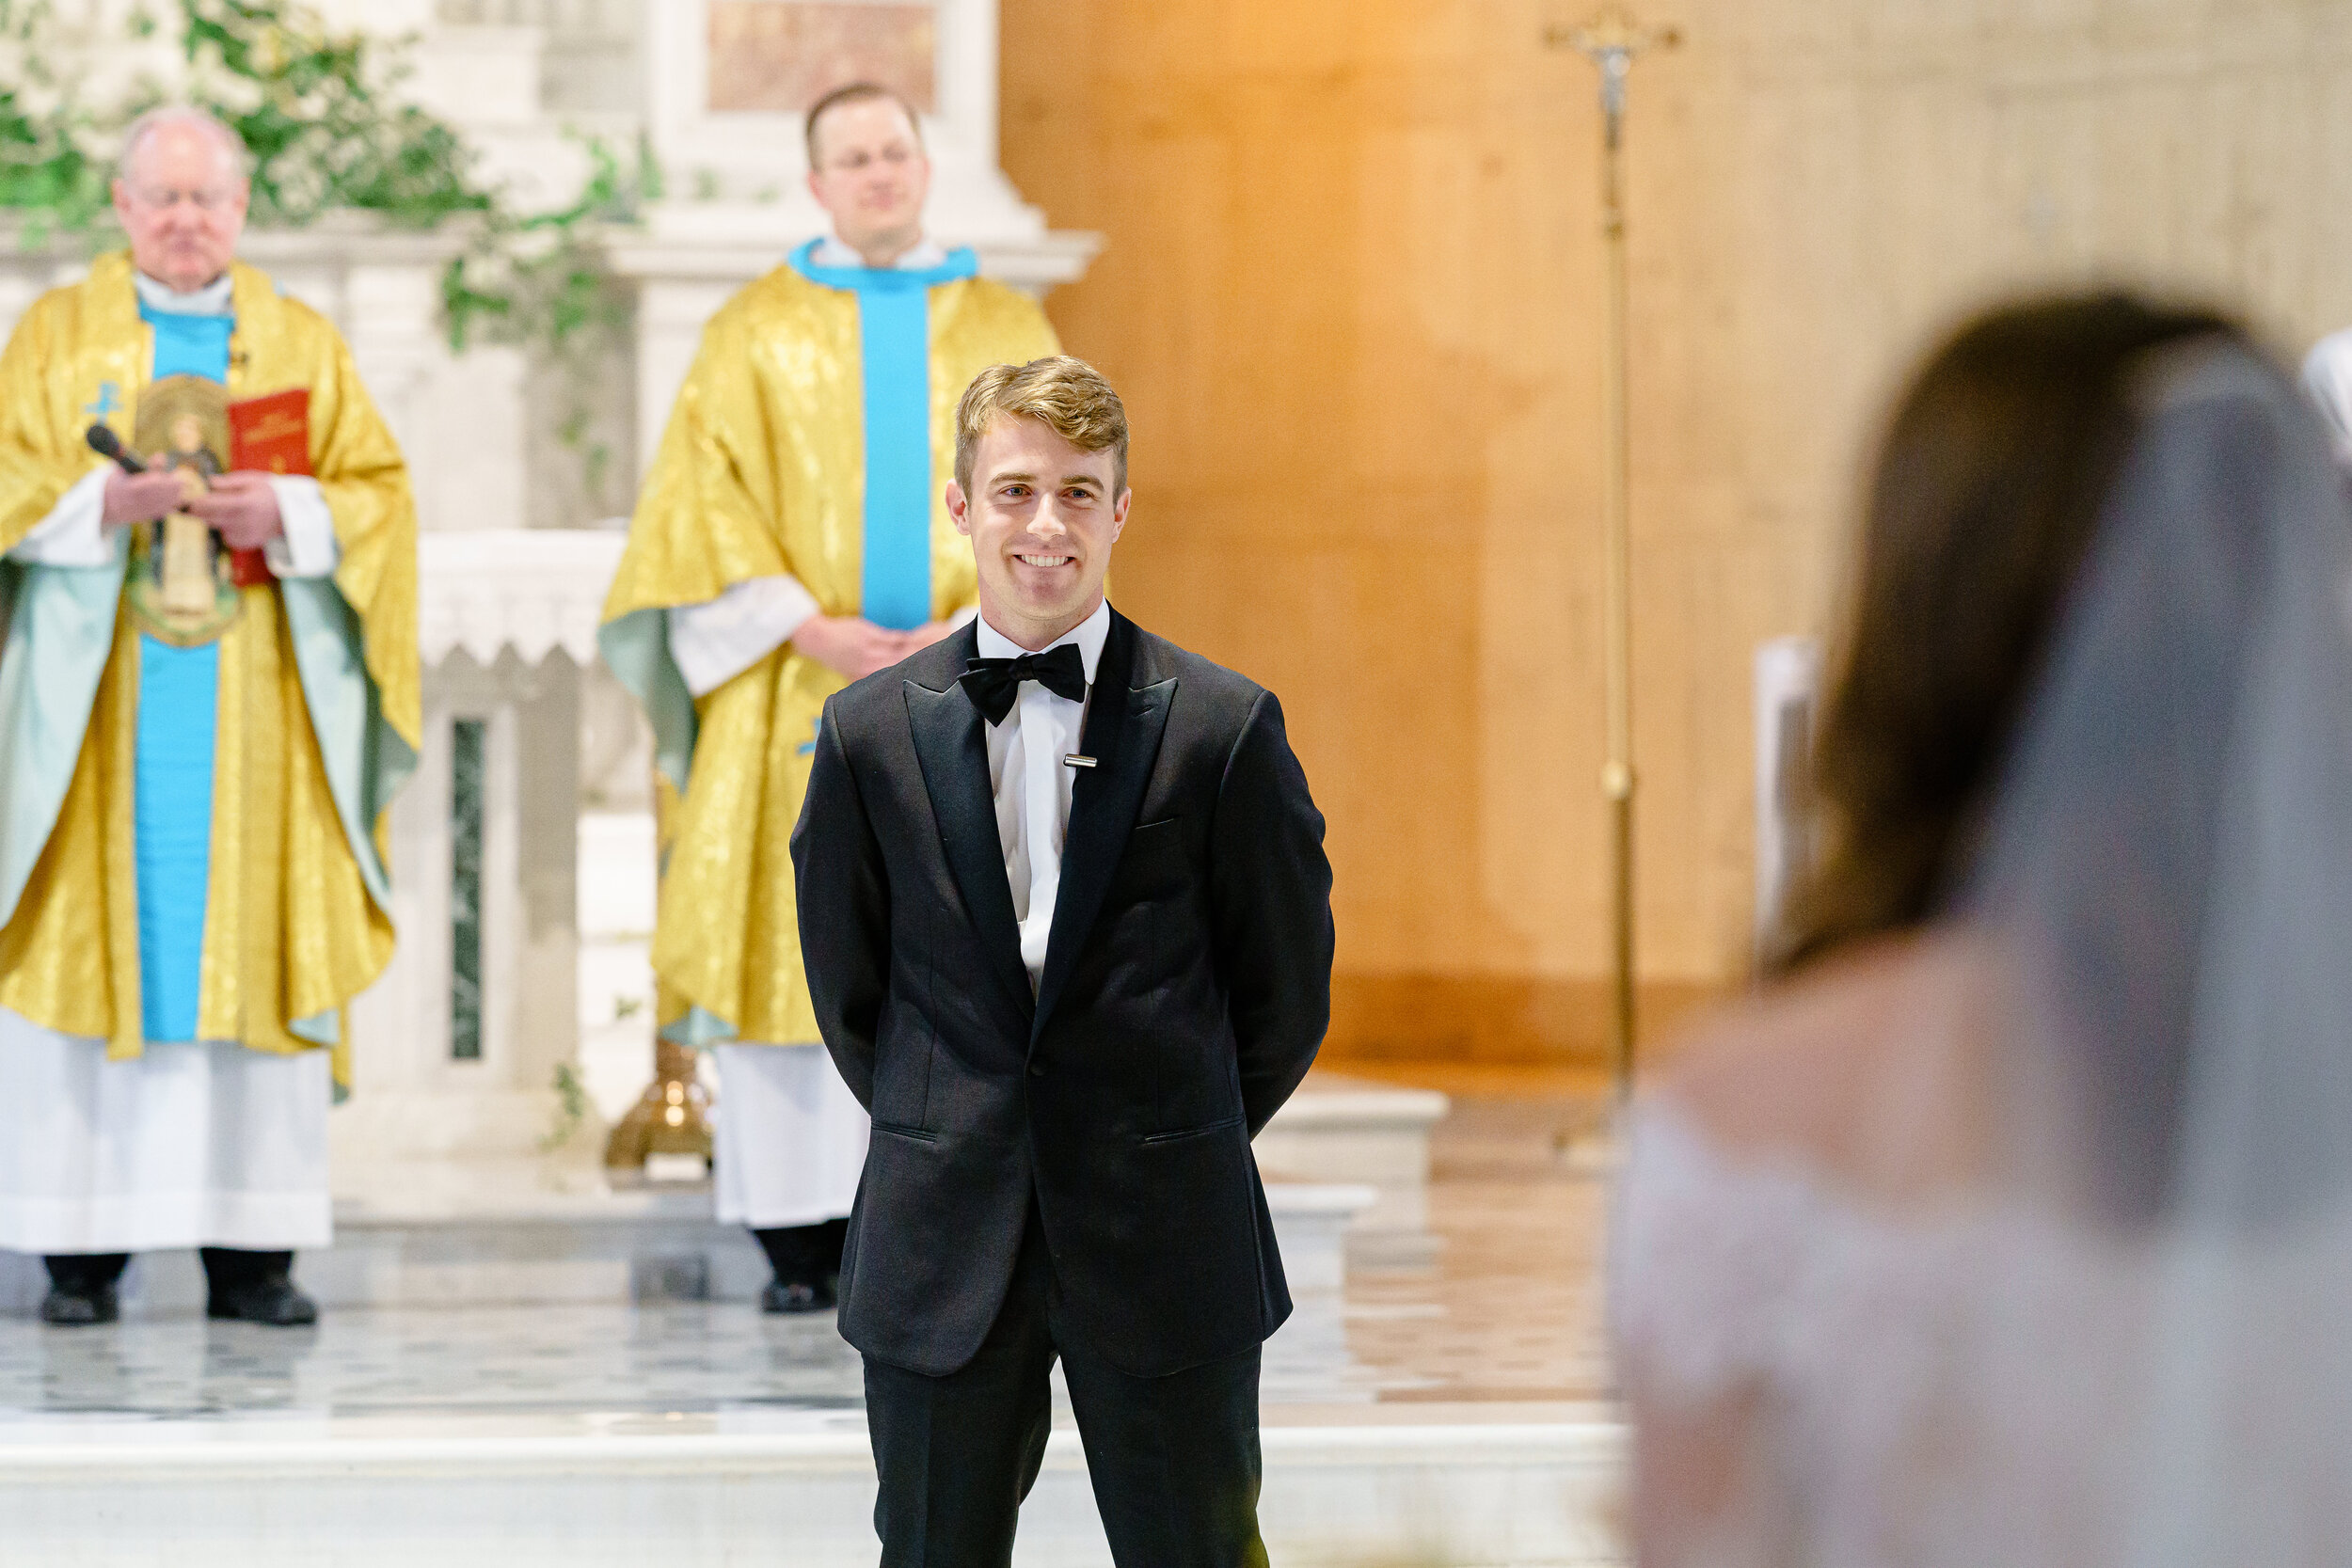 Classic groom seeing his elegant bride walk down the aisle